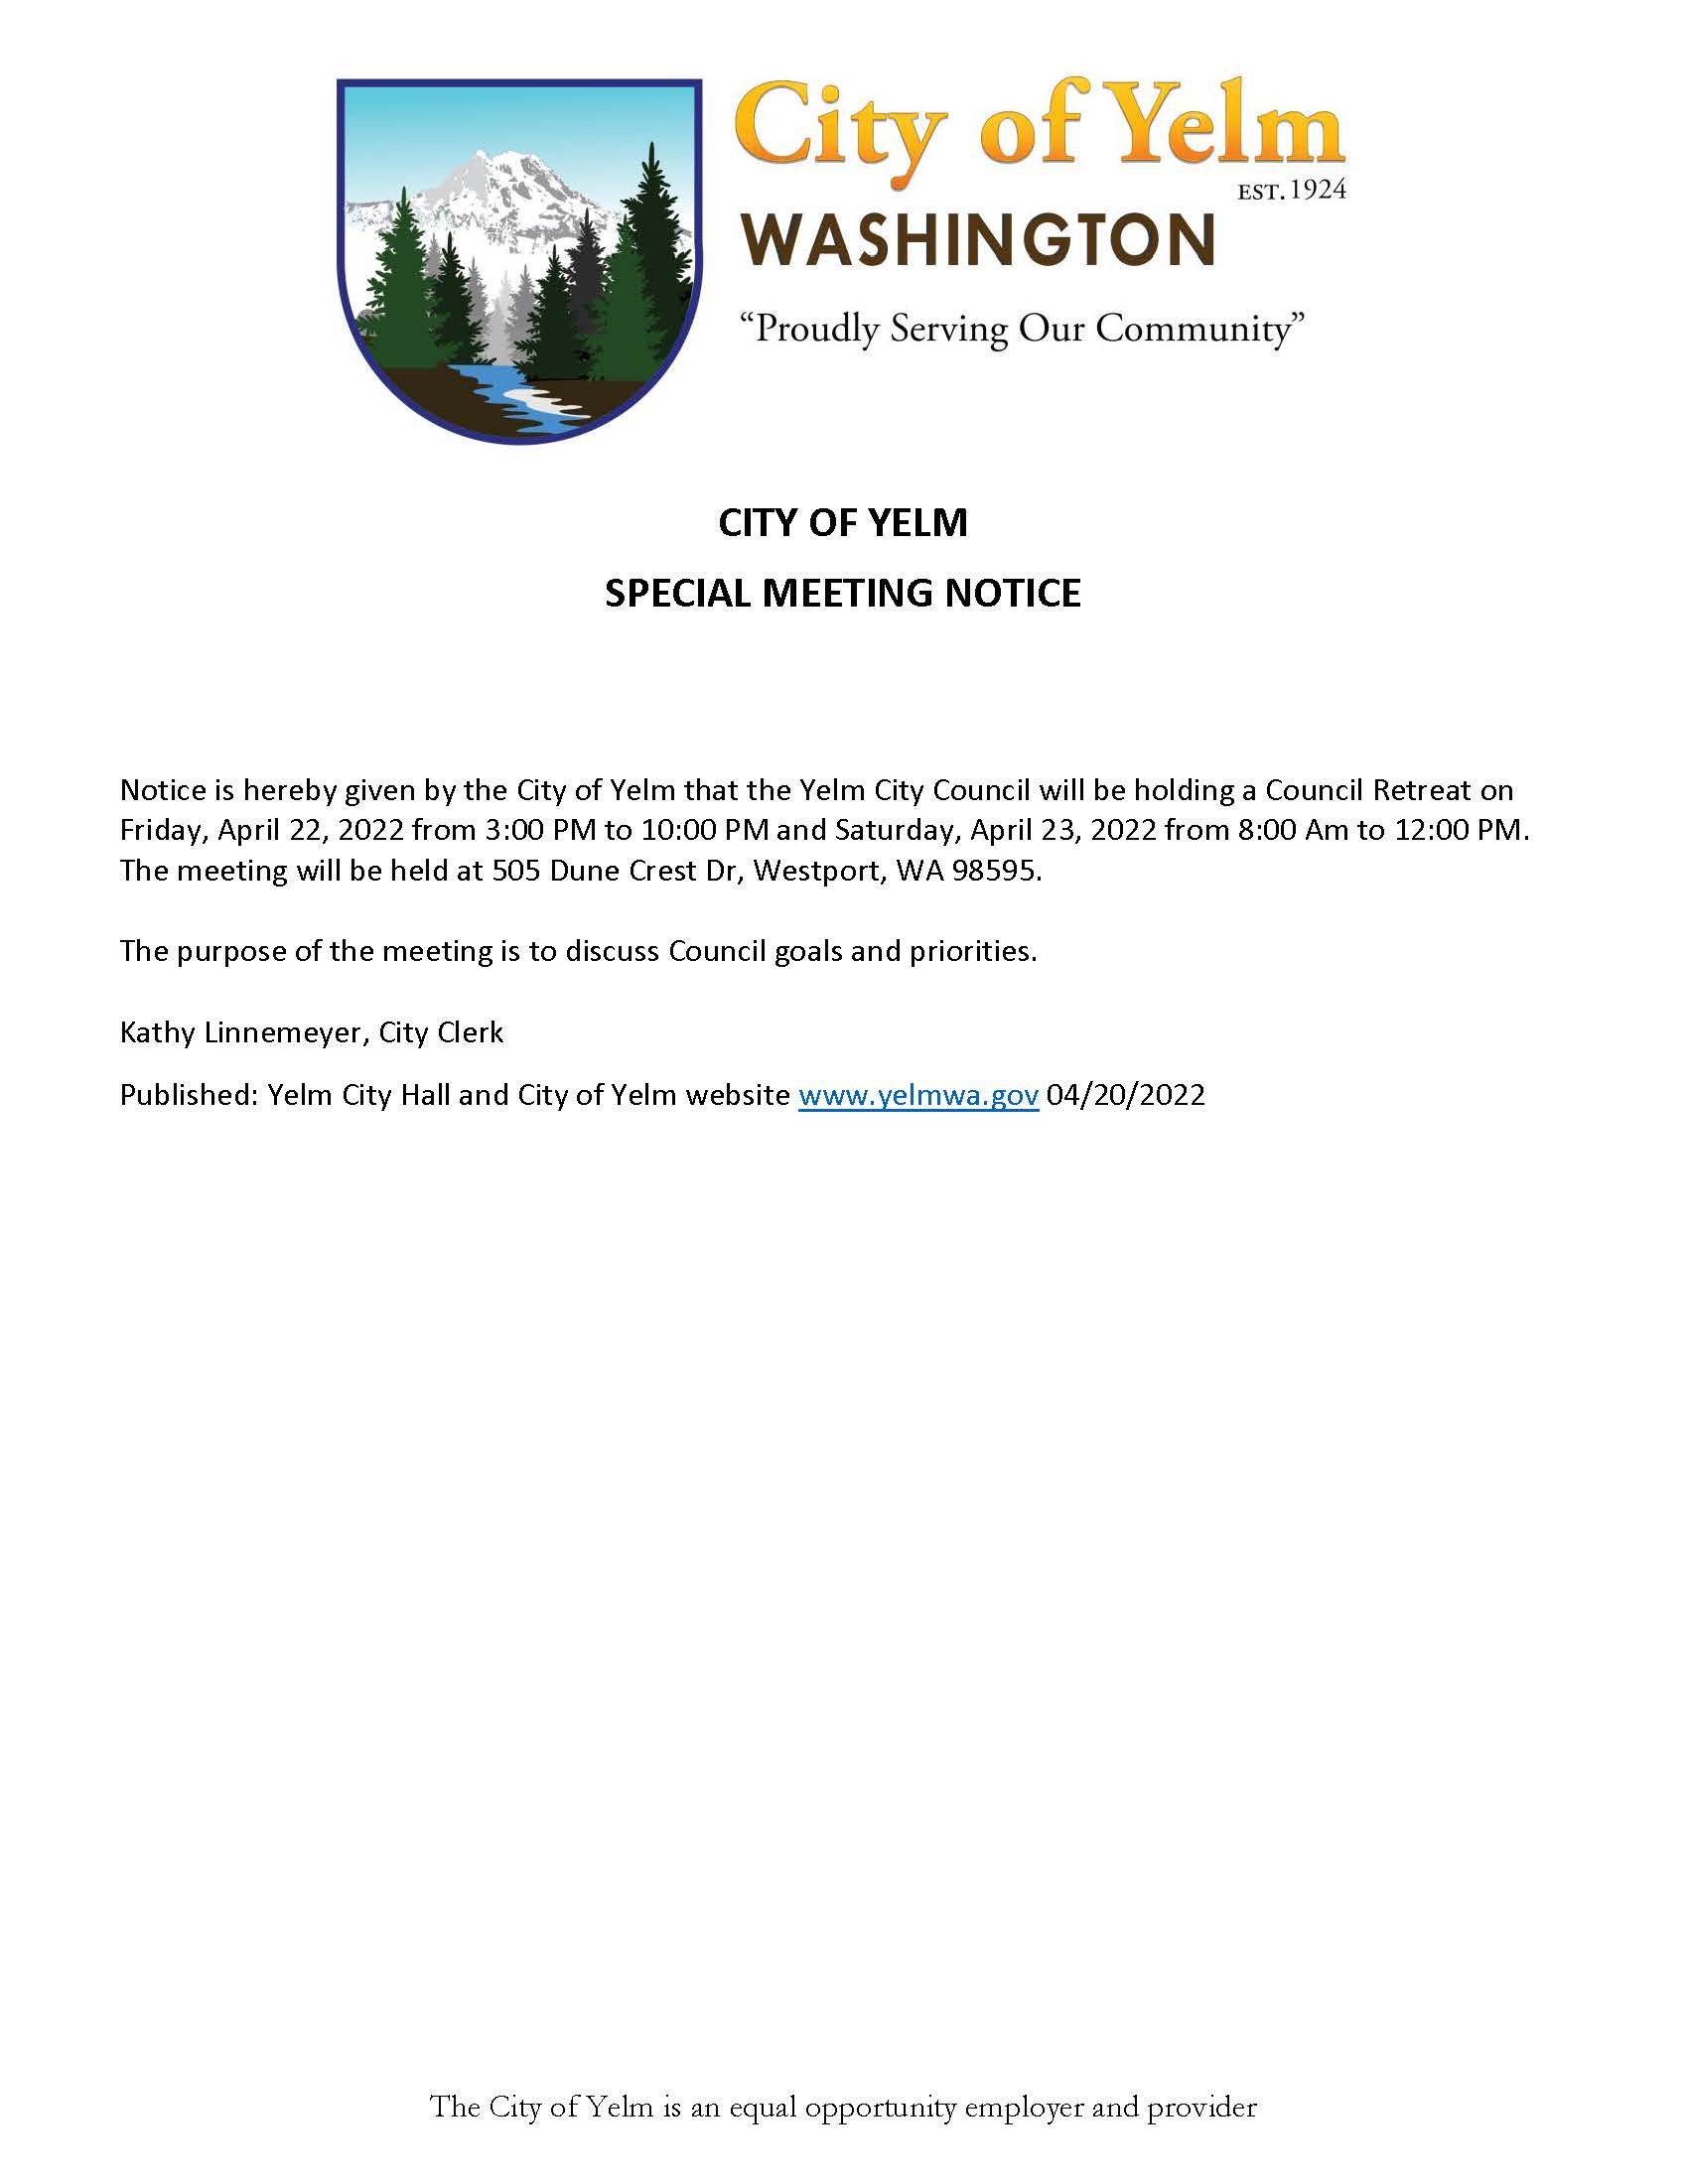 04 22 2022 Public Notice  Meeting - Council Retreat